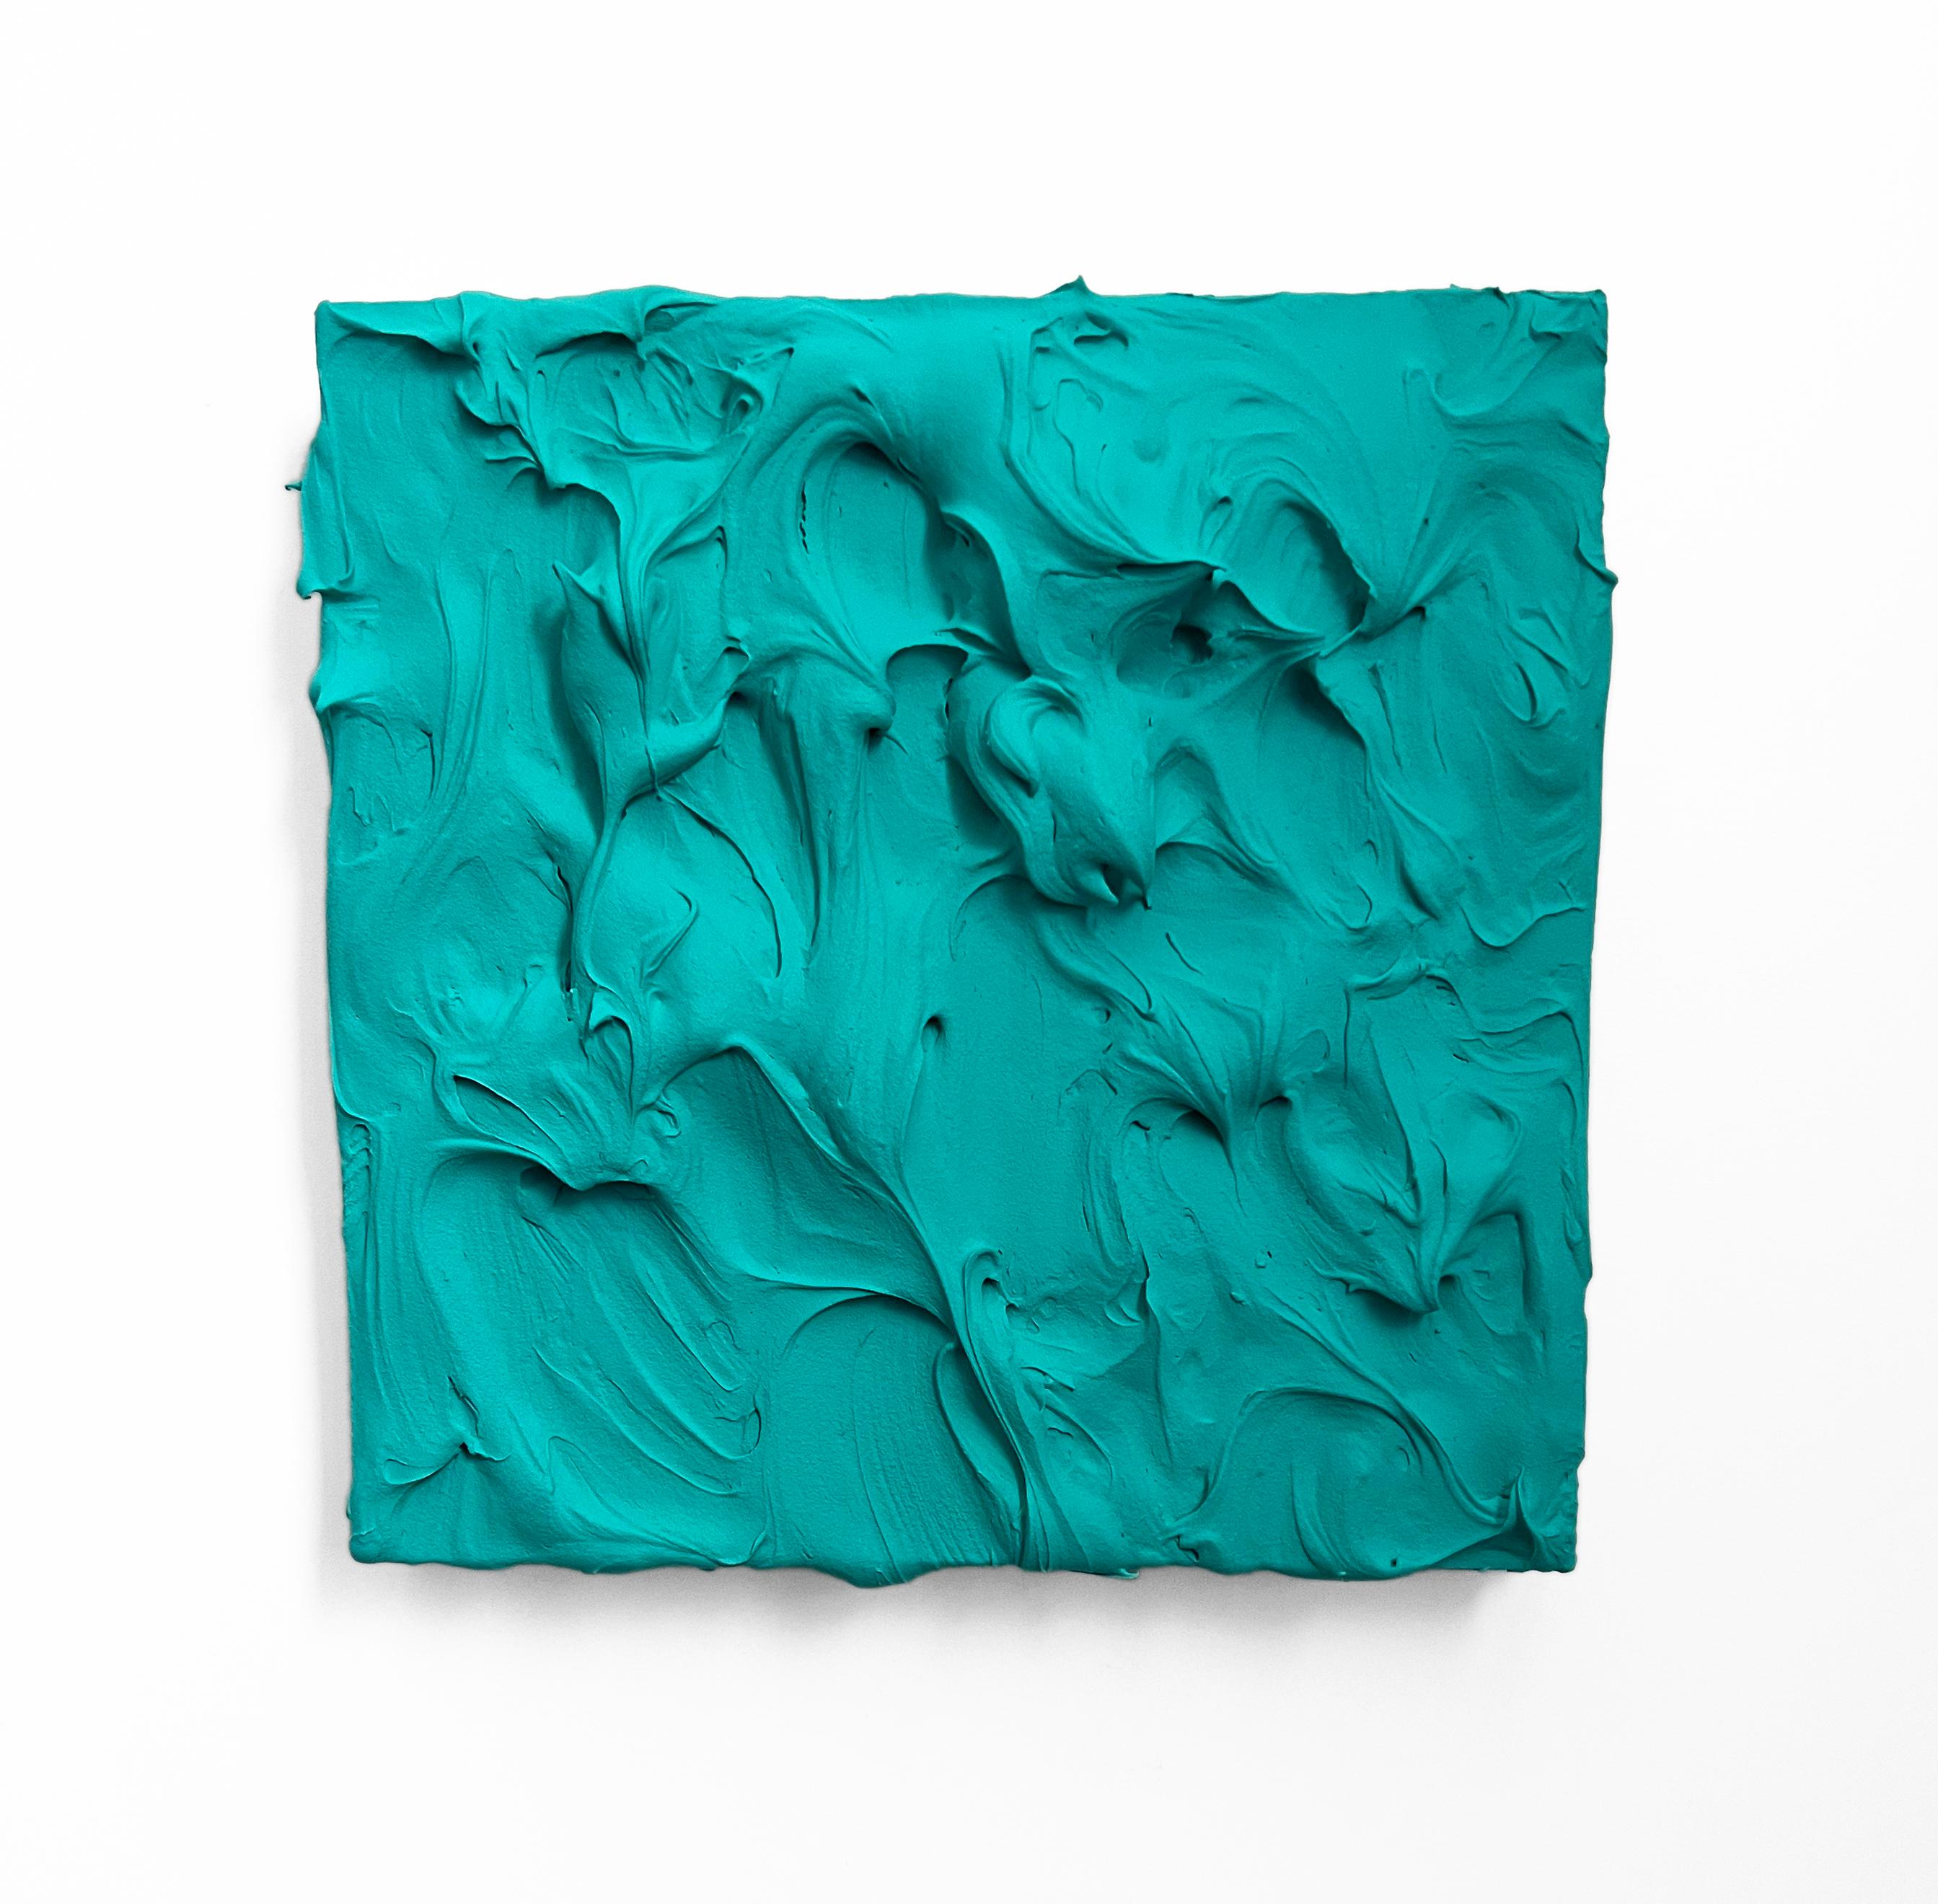 Chloe Hedden Abstract Sculpture - "Mint Excess" Wall Sculpture monochrome monochromatic teal aqua green mcm 